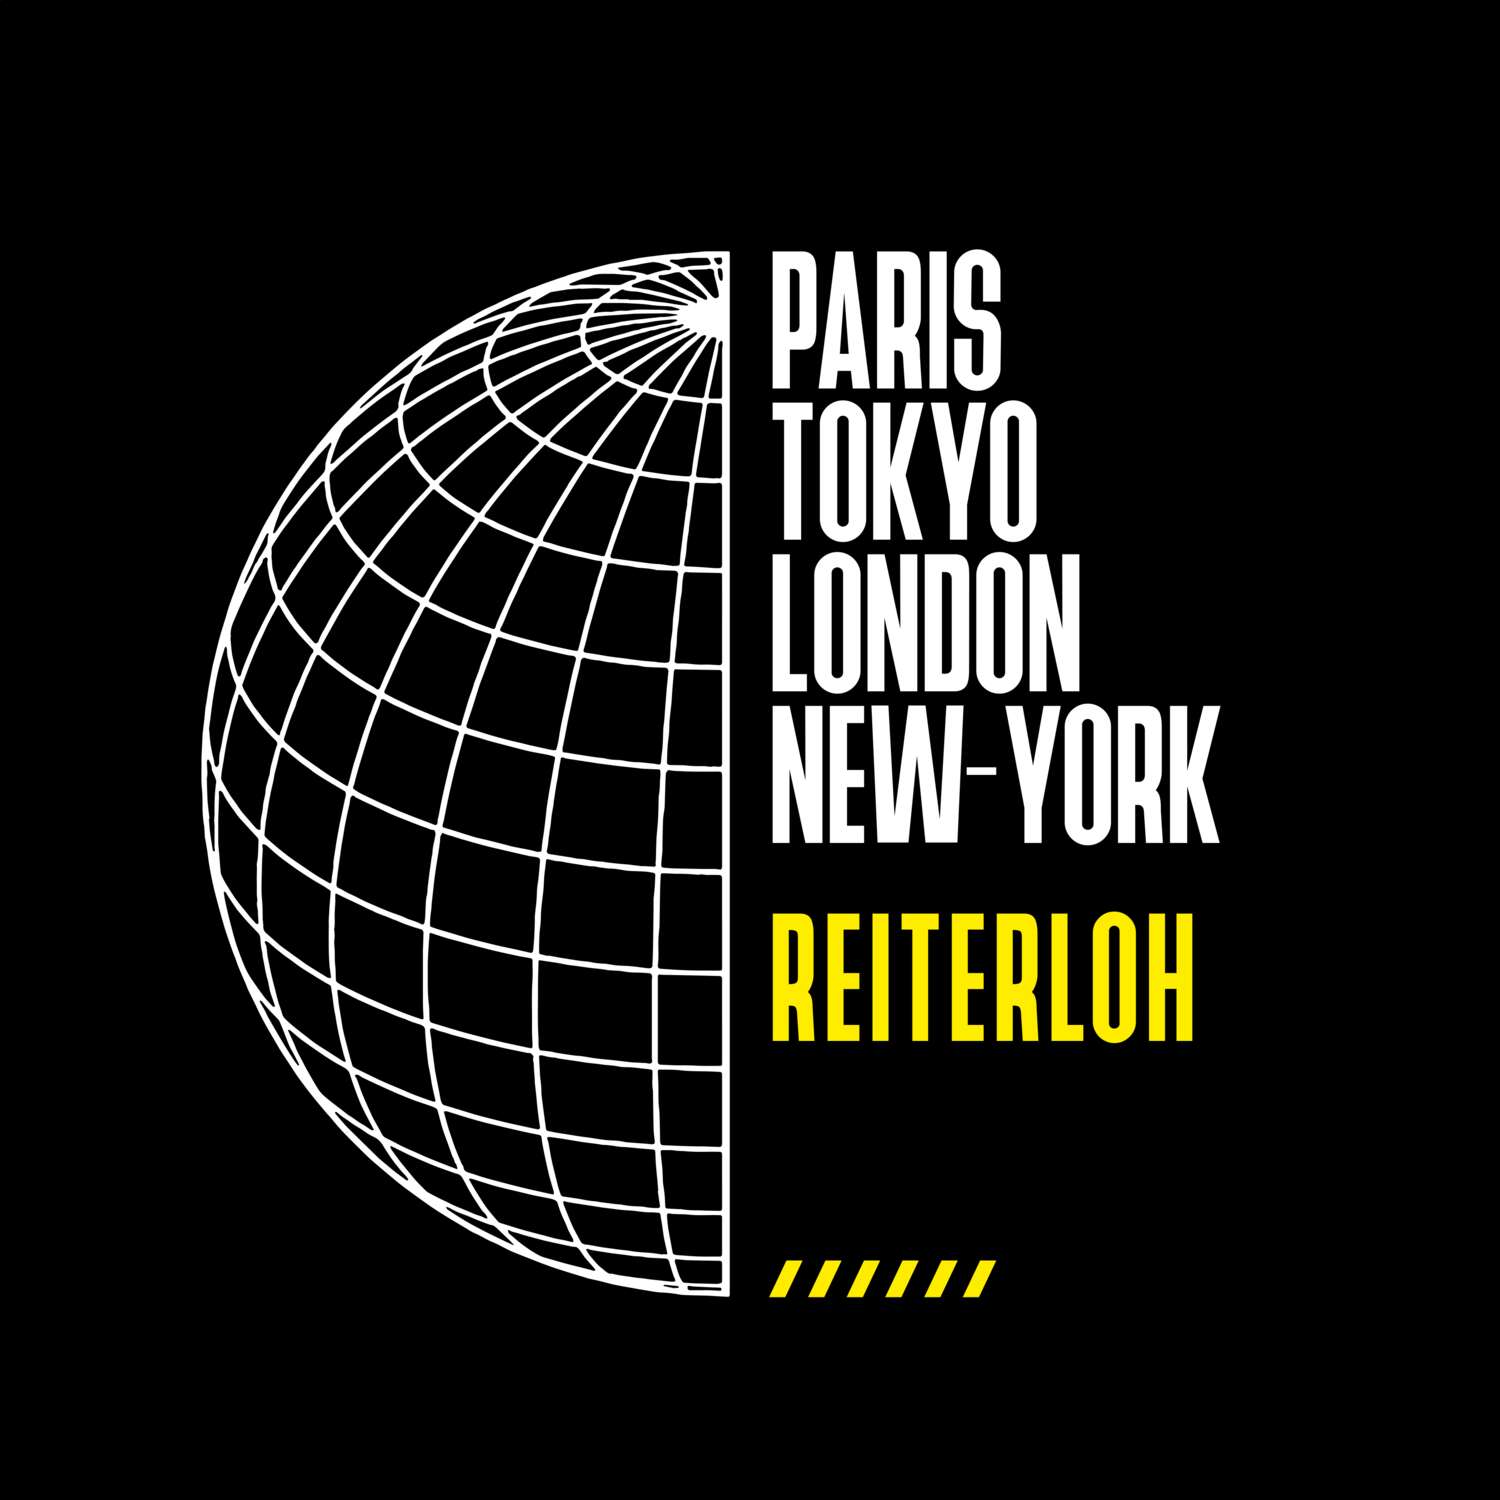 Reiterloh T-Shirt »Paris Tokyo London«